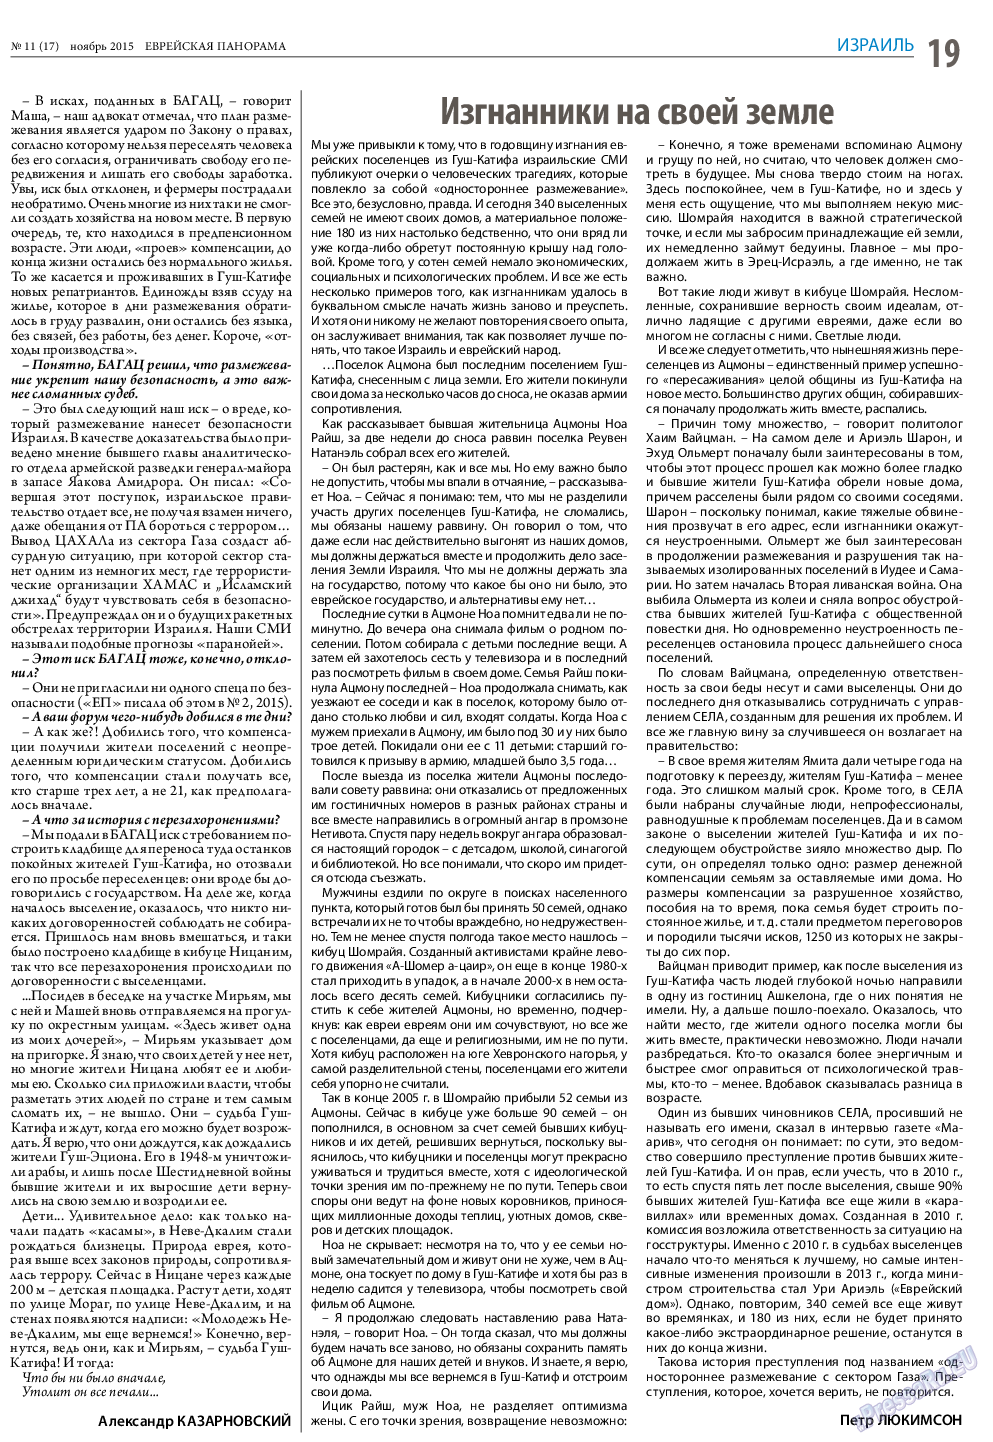 Еврейская панорама, газета. 2015 №11 стр.19